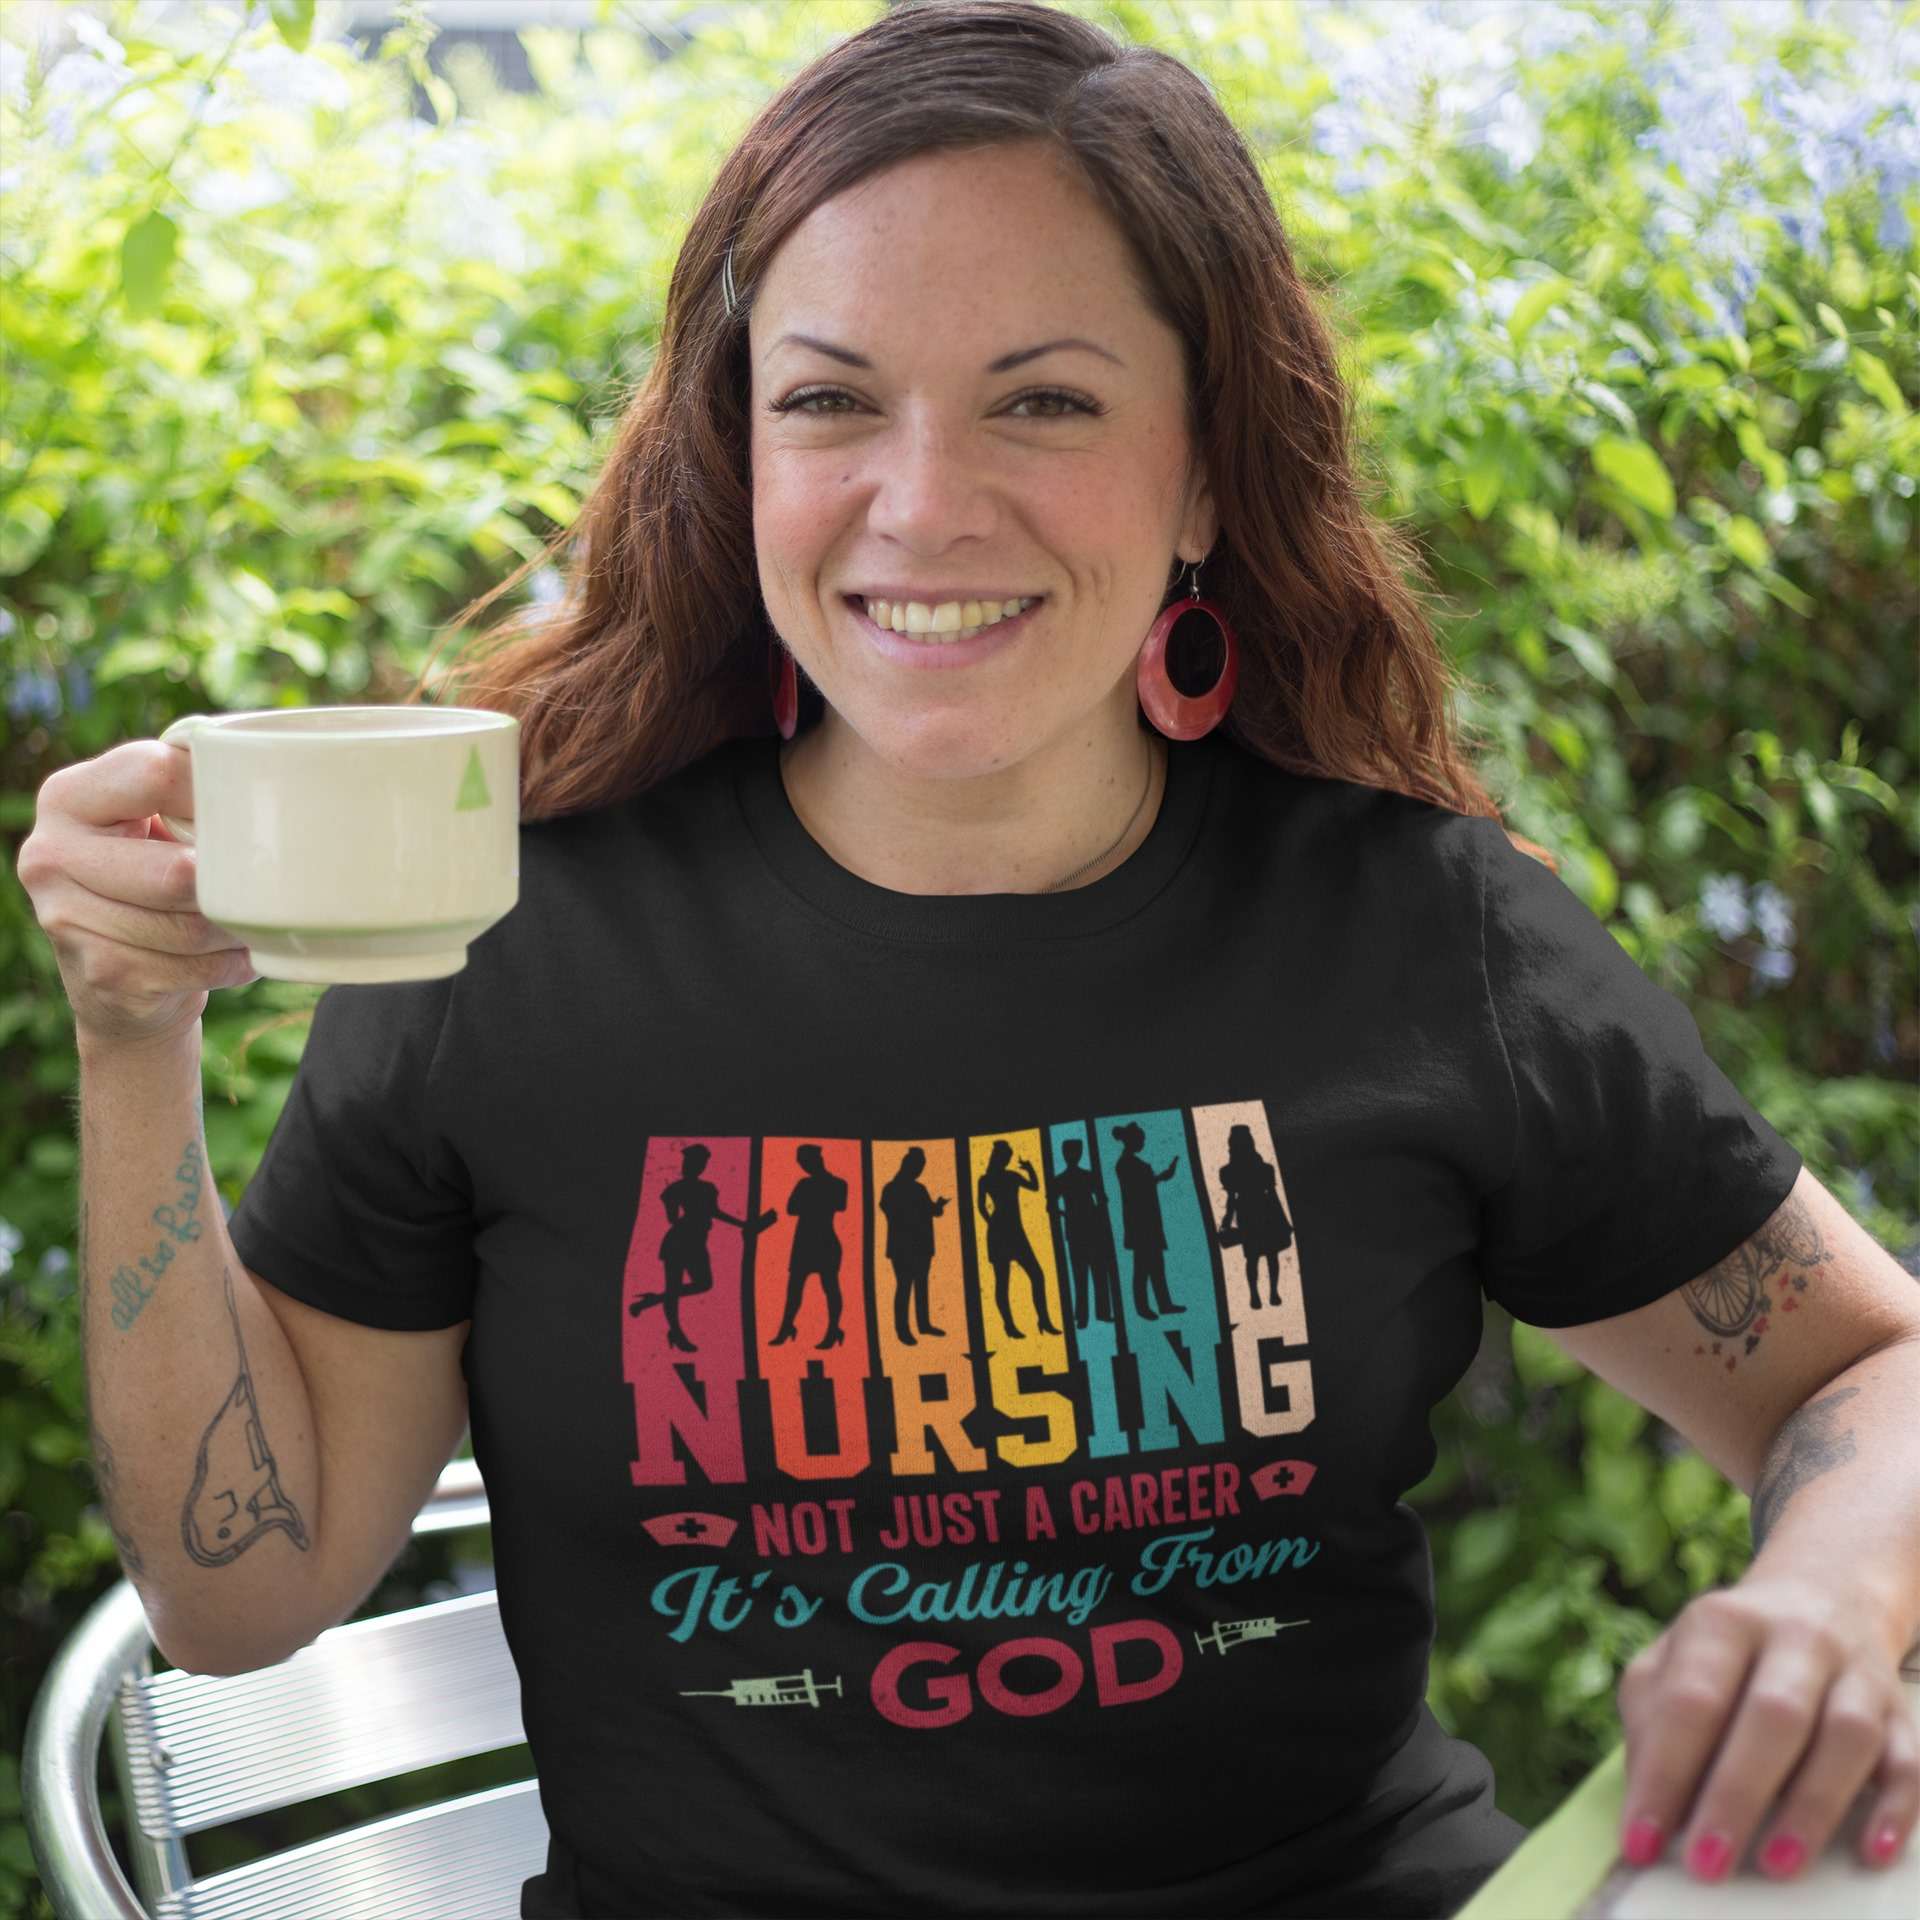 Nursing not just a career - It's calling from god, Nurse the job